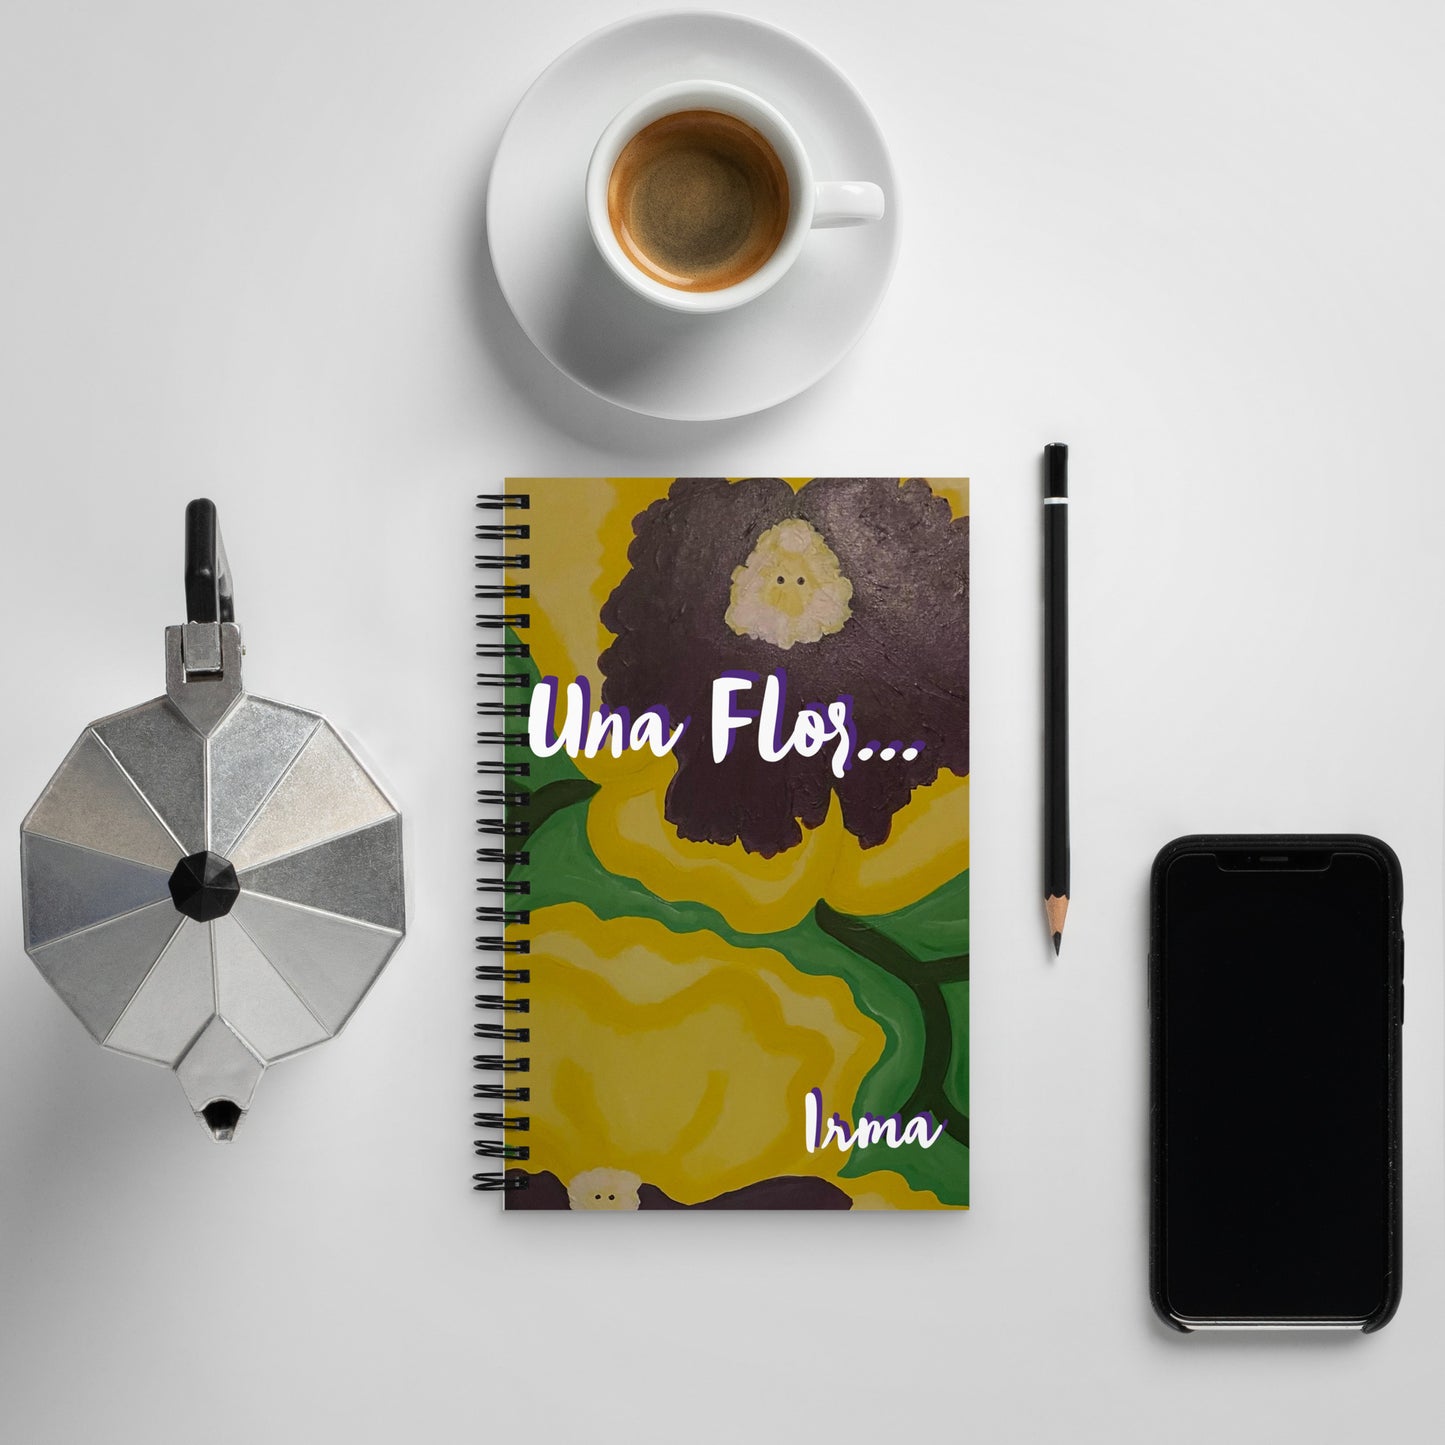 Una Flor by Irma Spiral notebook